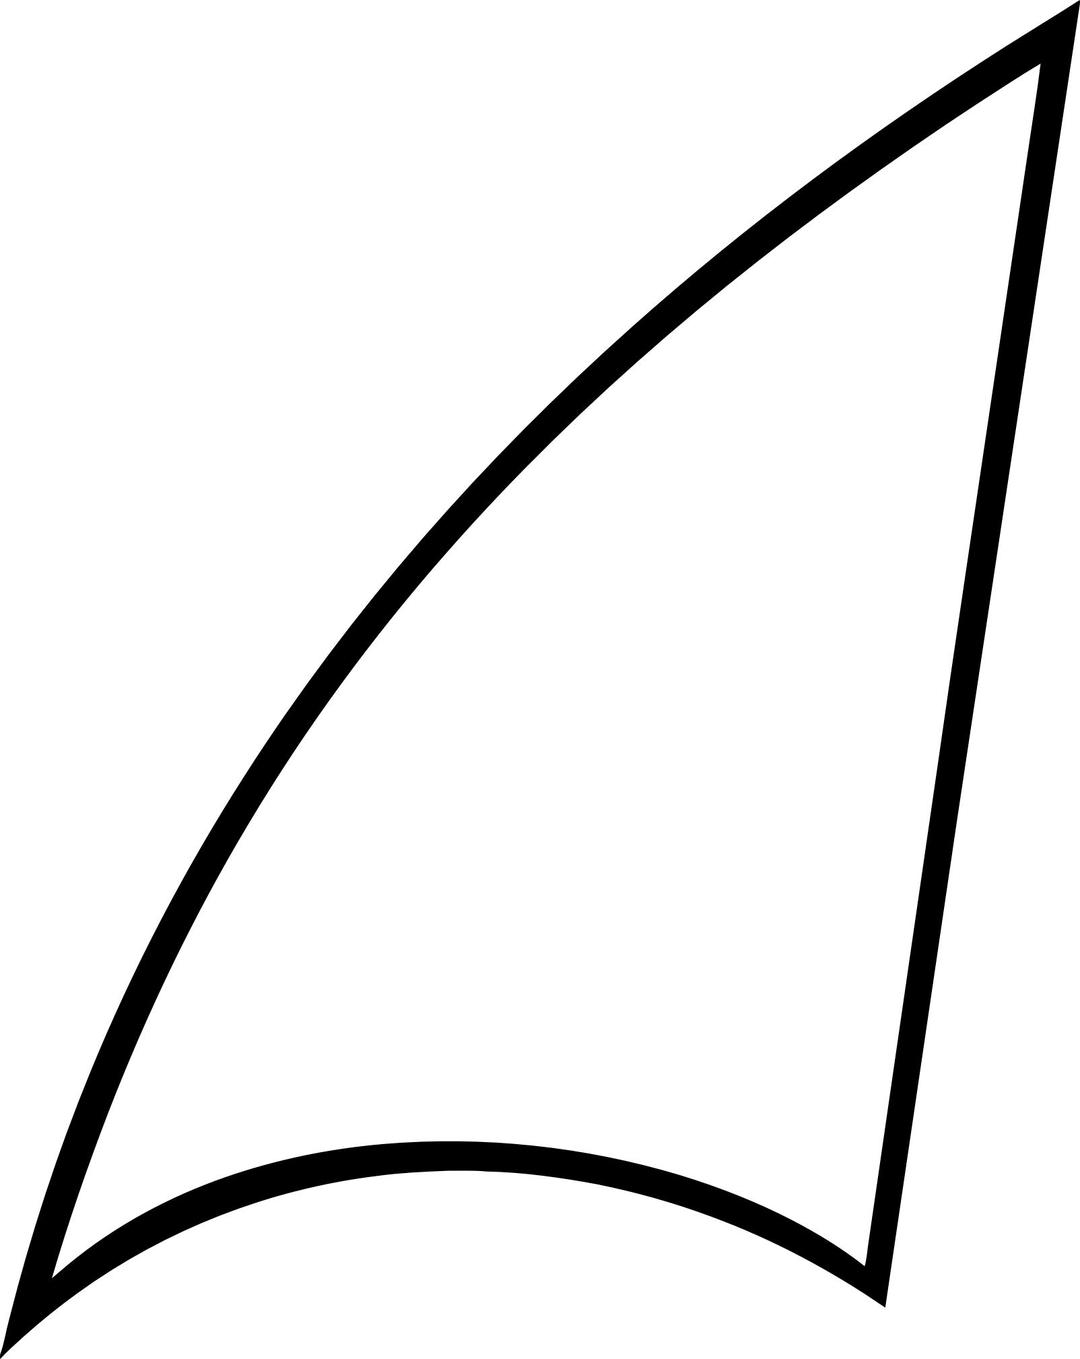 Shark Fin - Sail - Abstract 002 png transparent